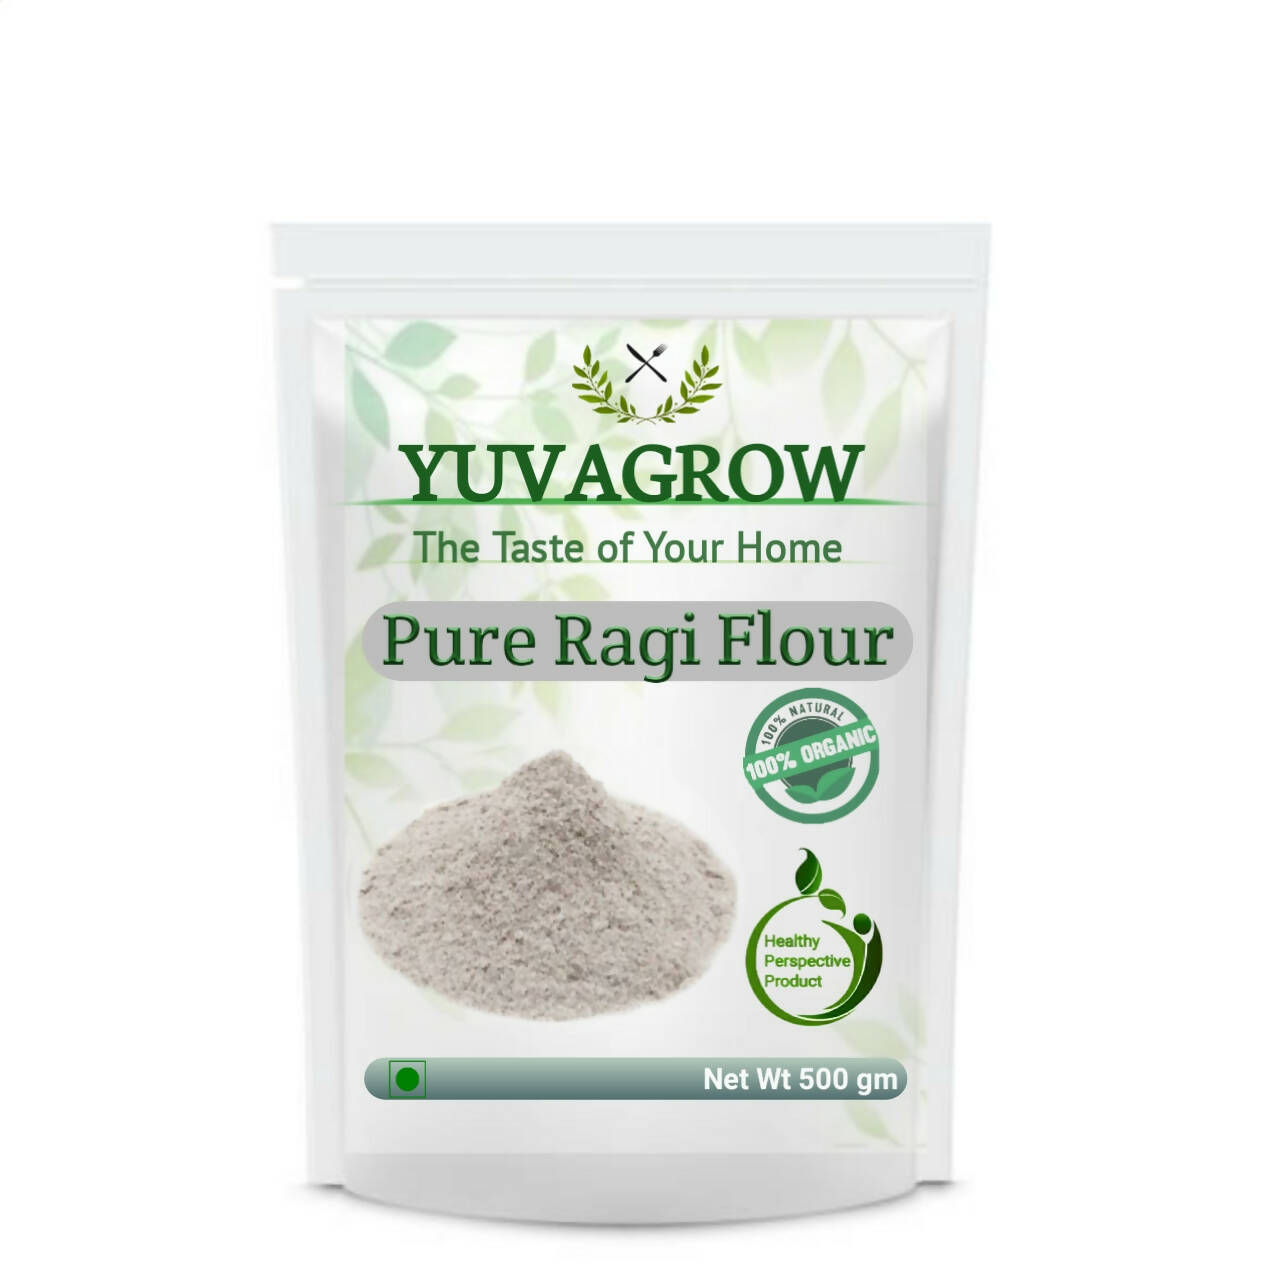 Yuvagrow Pure Ragi Flour - buy in USA, Australia, Canada